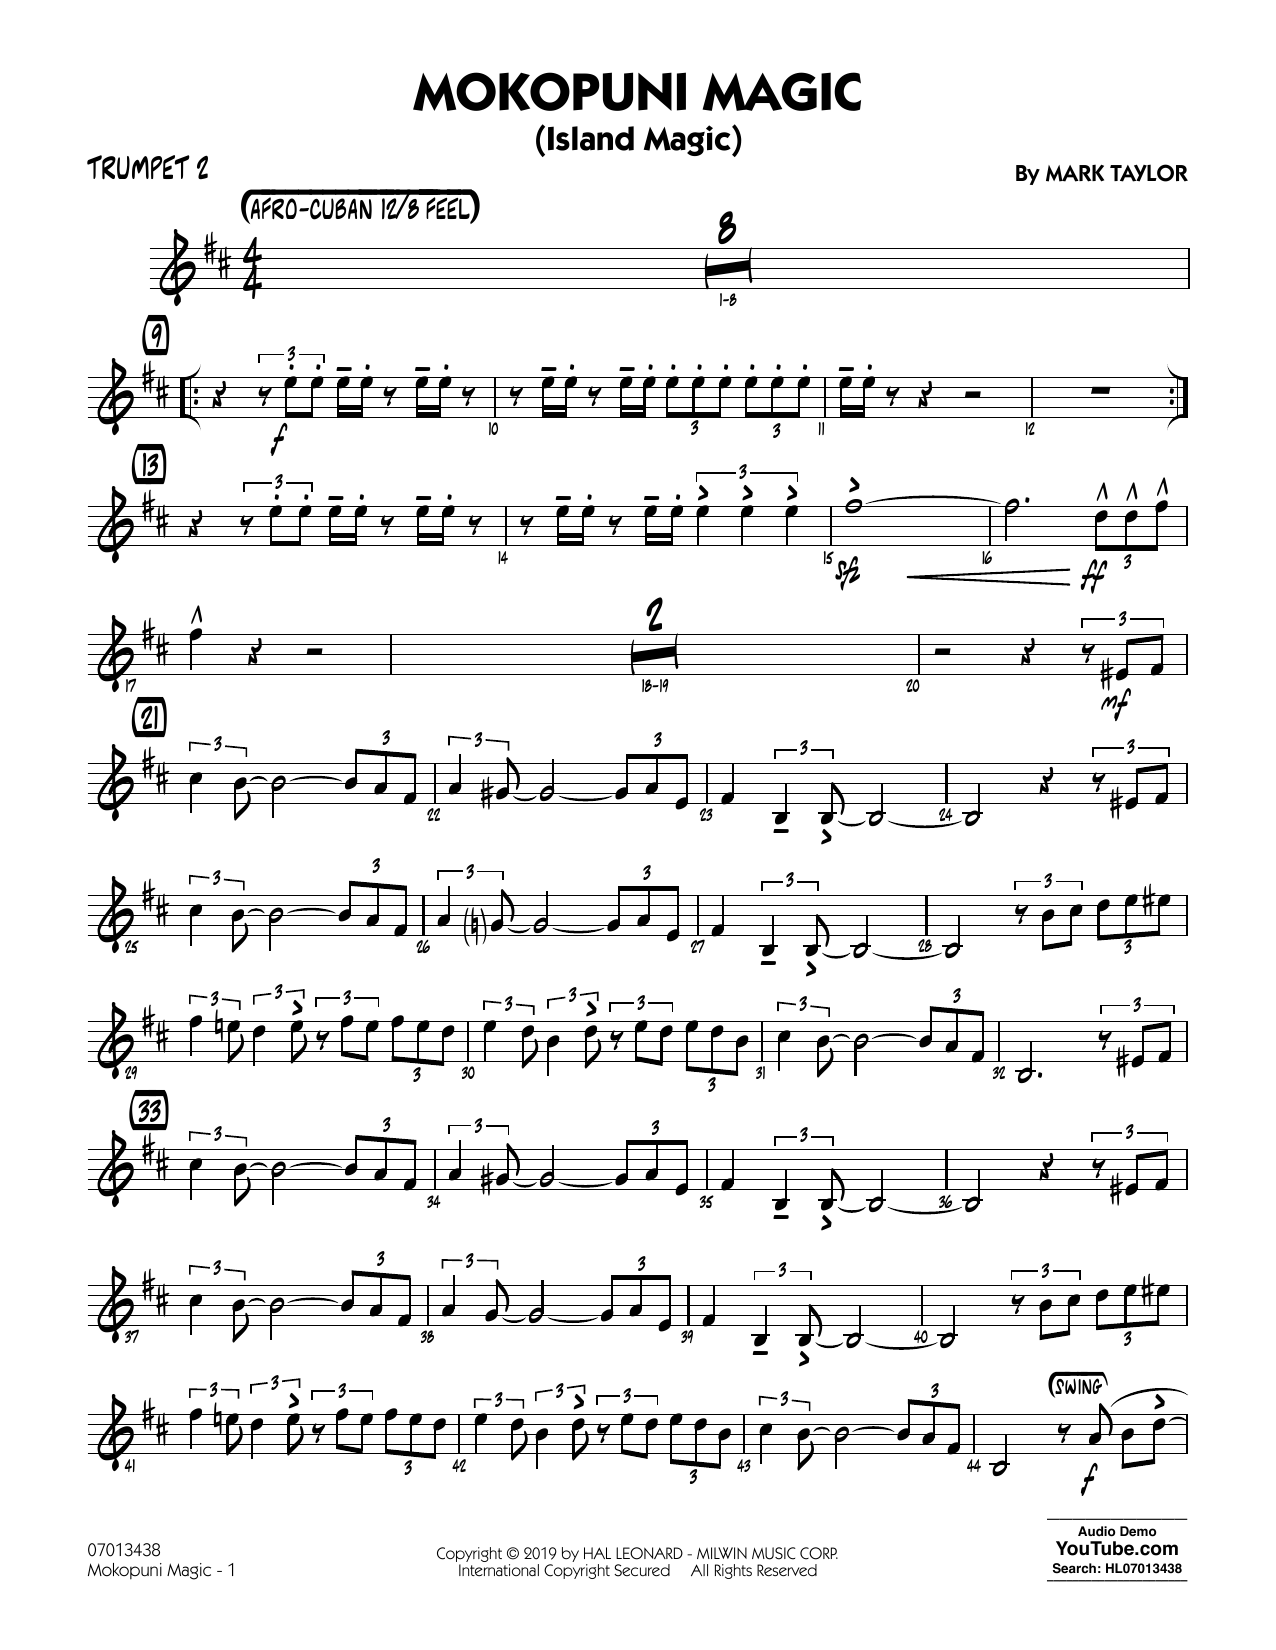 Download Mark Taylor Mokopuni Magic (Island Magic) - Trumpet 2 Sheet Music and learn how to play Jazz Ensemble PDF digital score in minutes